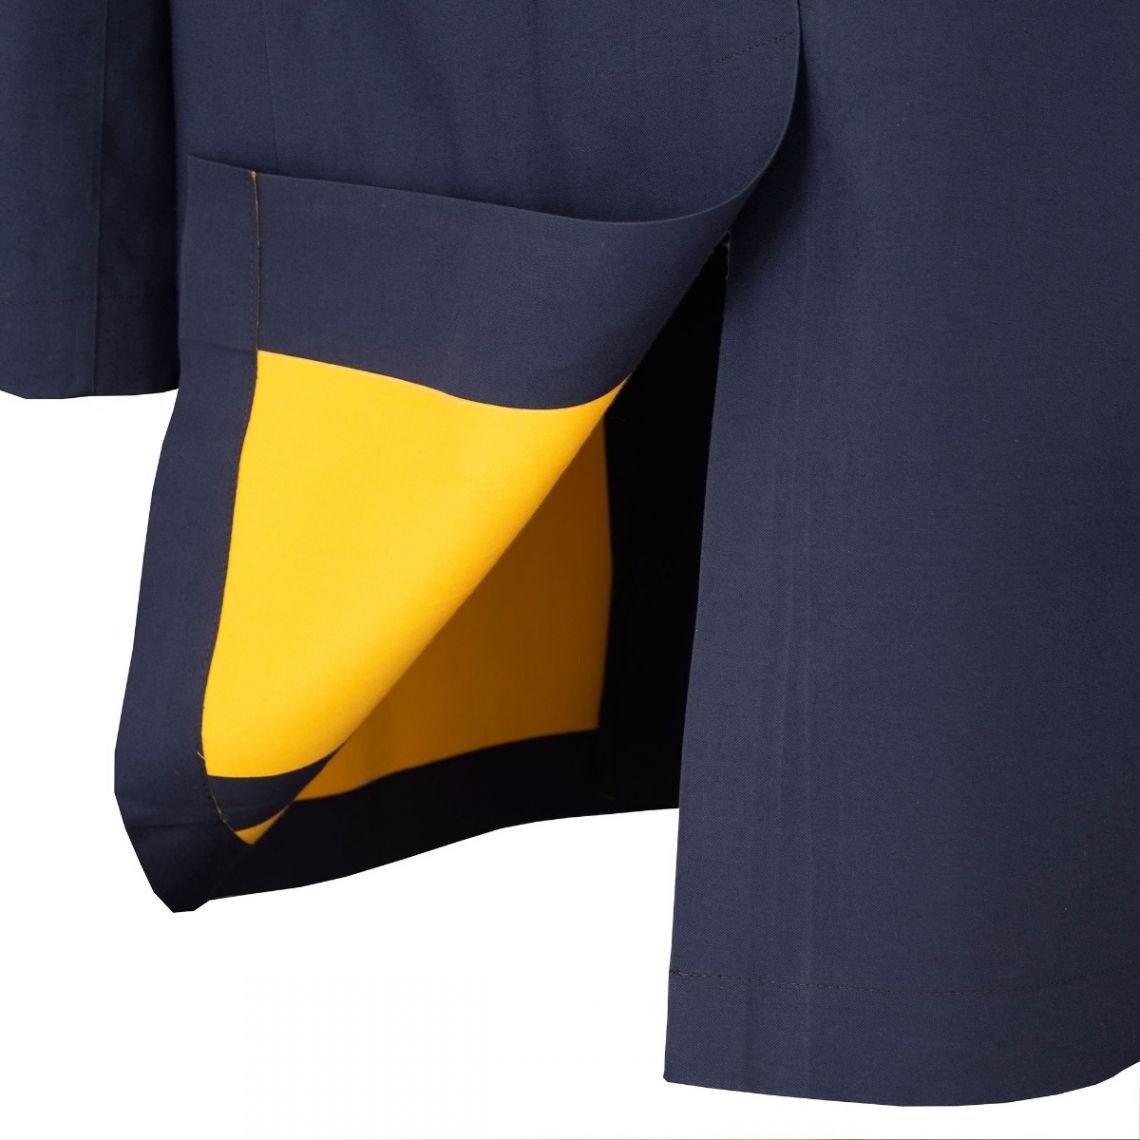 Men's Mackintosh Coats | Mac Raincoats | Cordings Original Mackintosh Raincoat